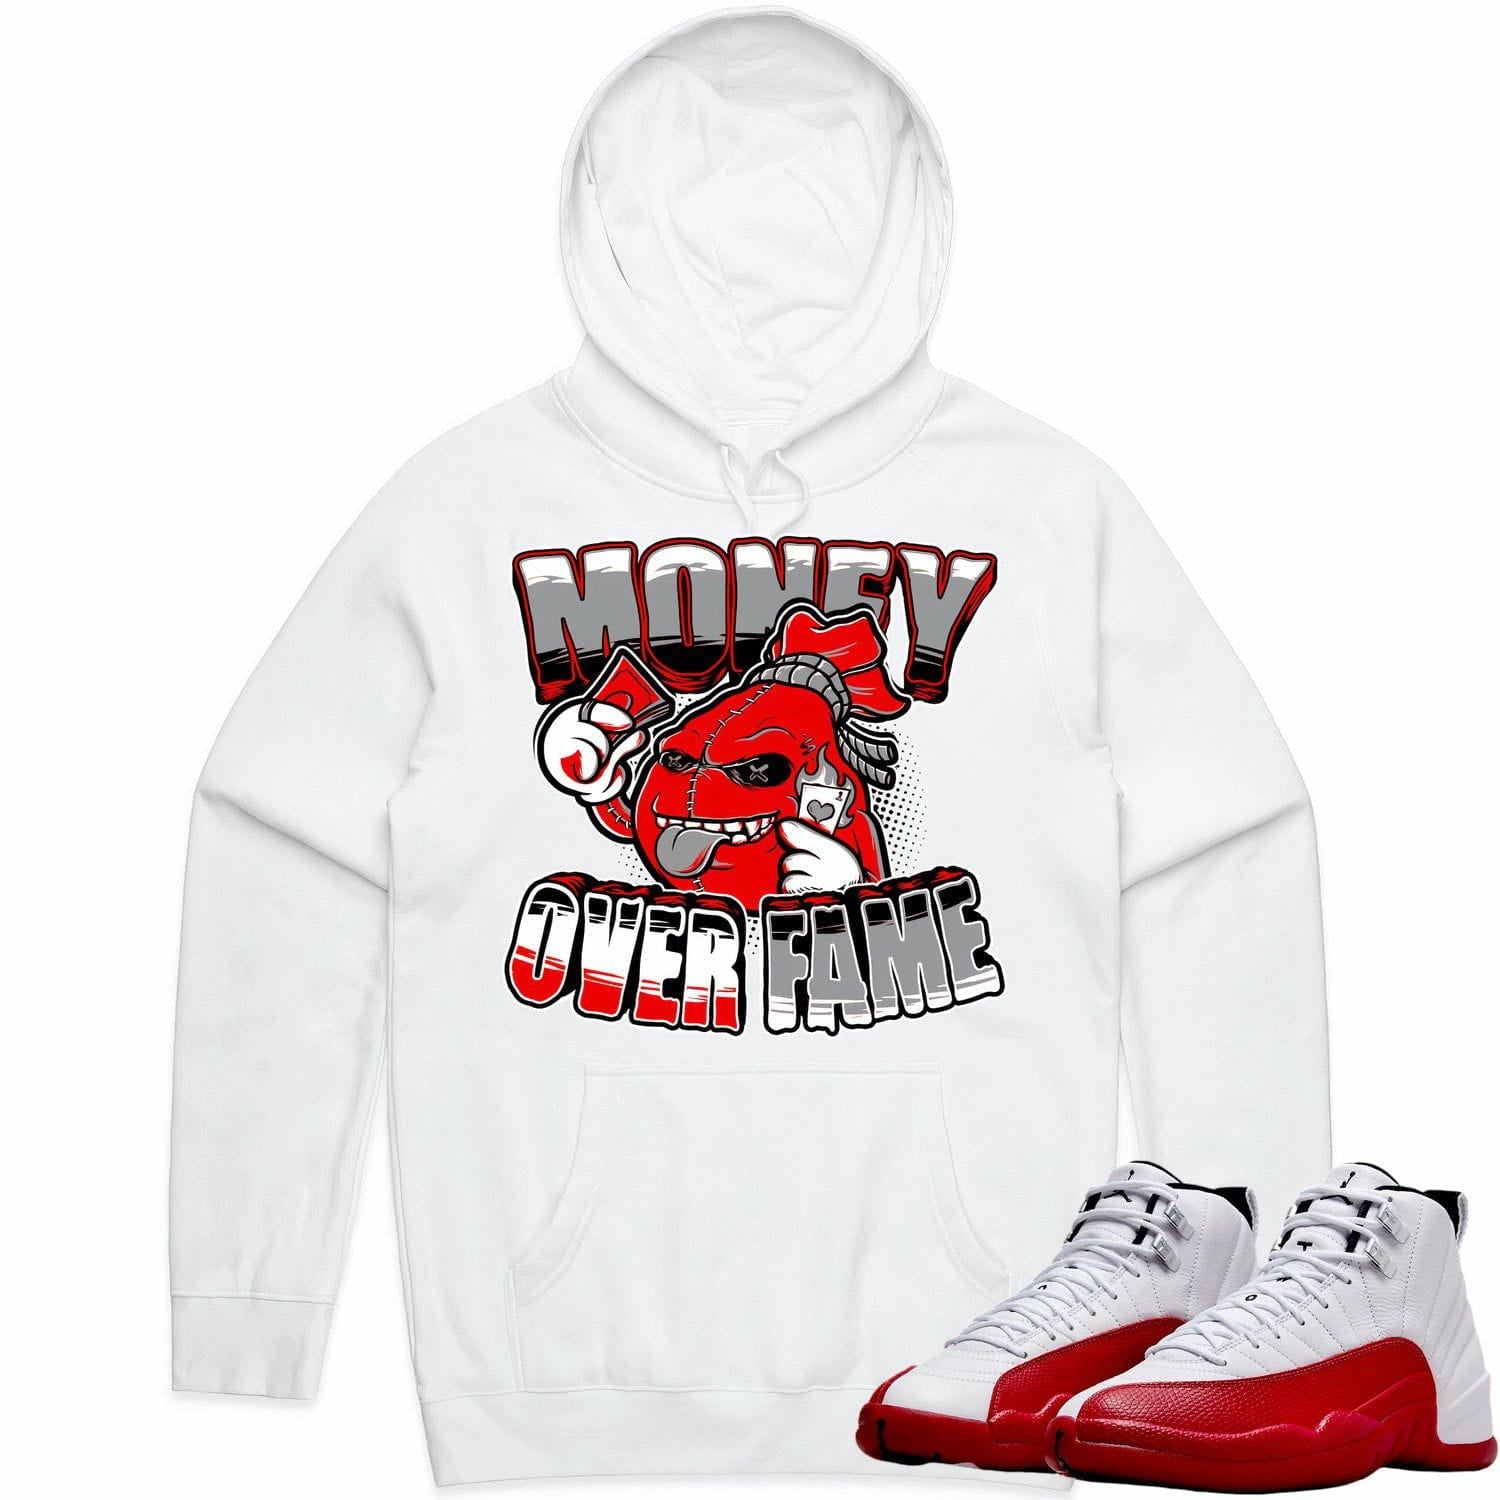 Cherry 12s Hoodie - Jordan Retro 12 Cherry Hoodie - Money over Fame